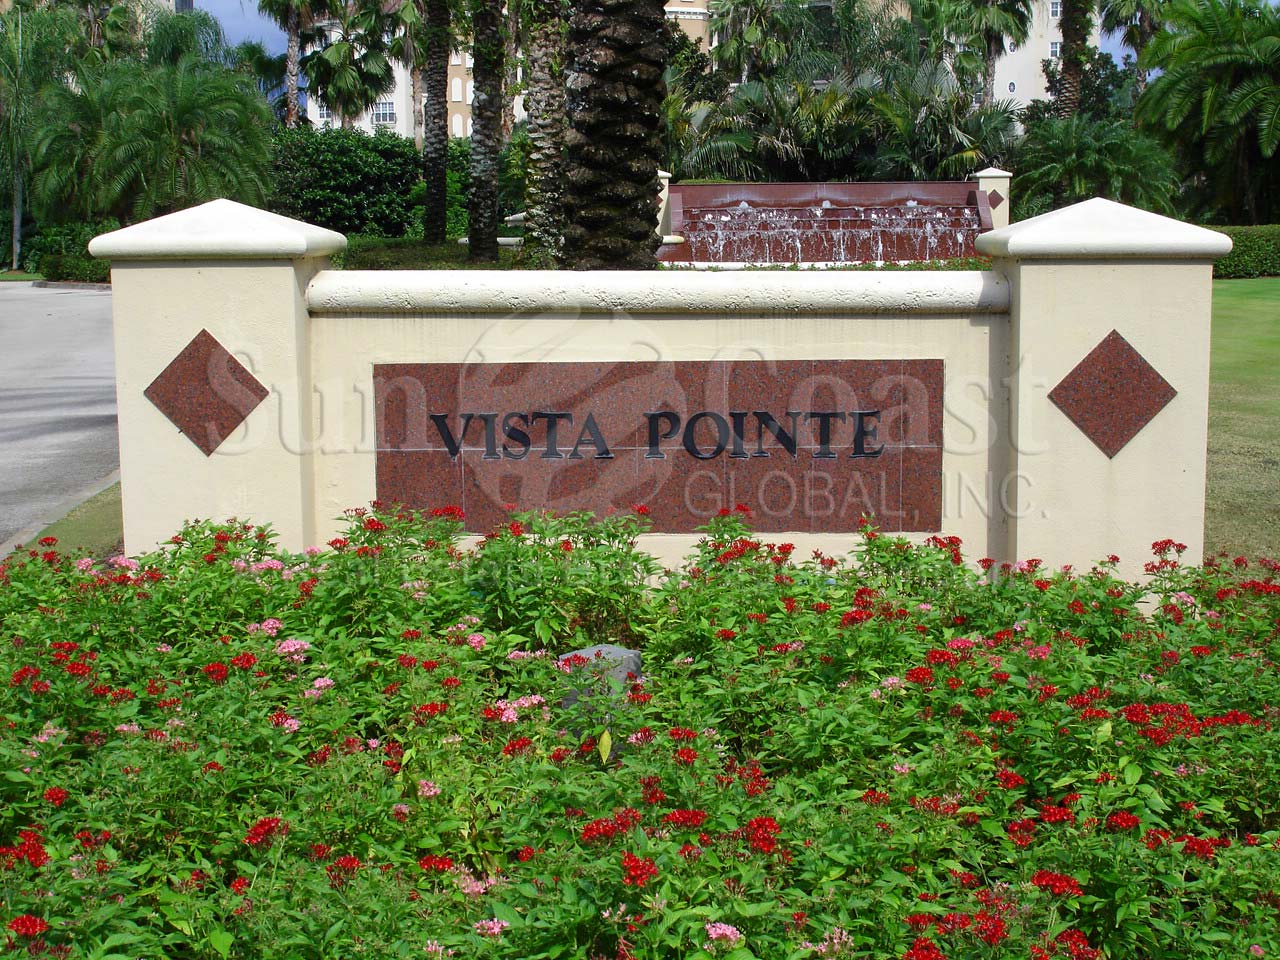 Vista Pointe signage